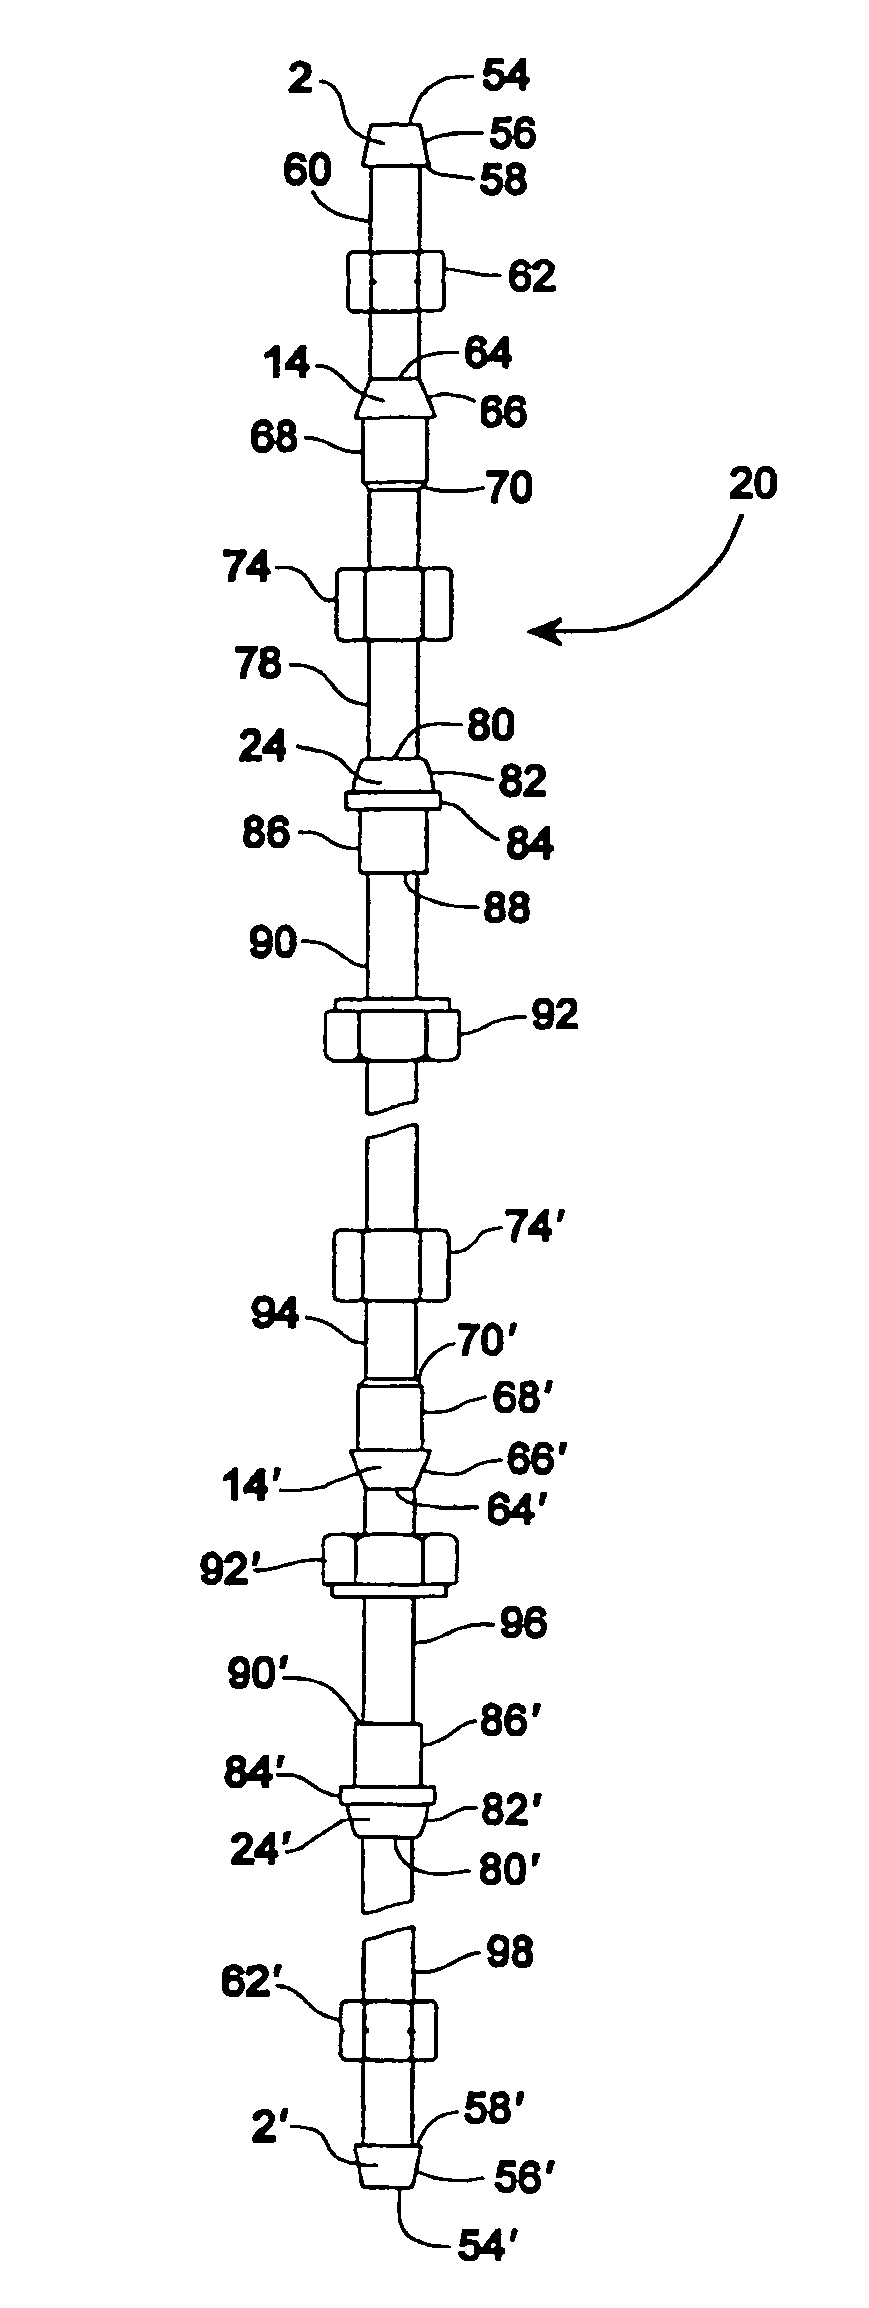 Universal connector tubing